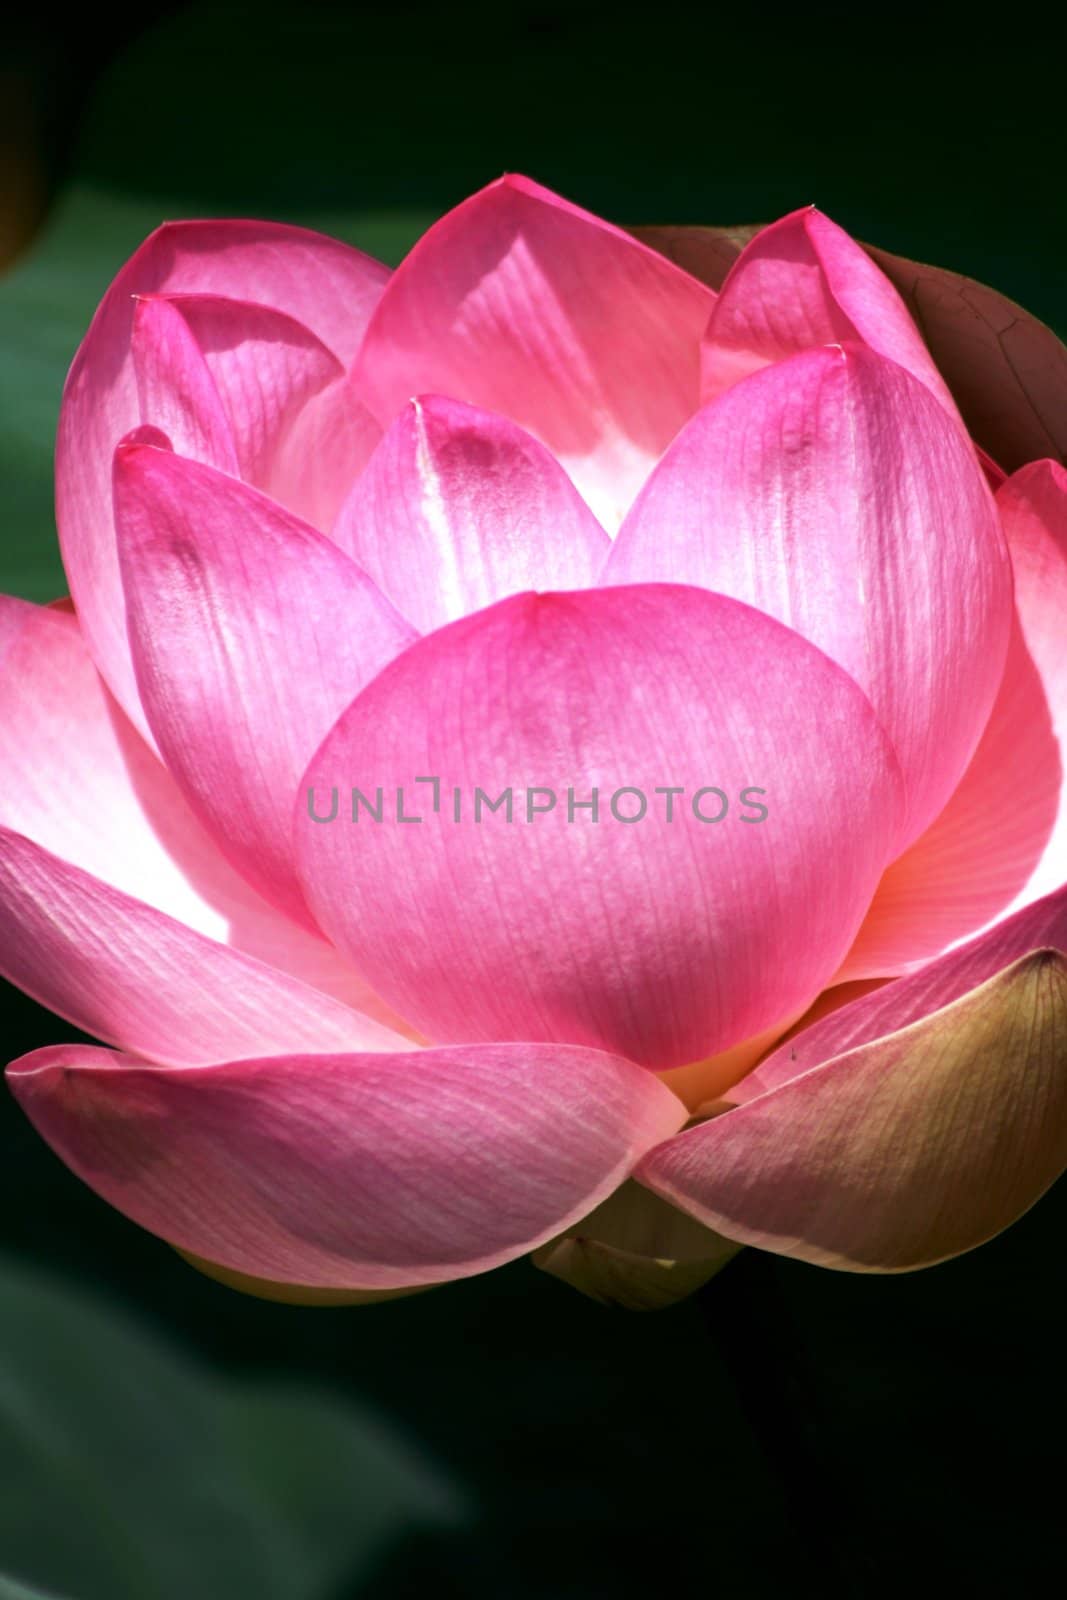 Lotus flower details